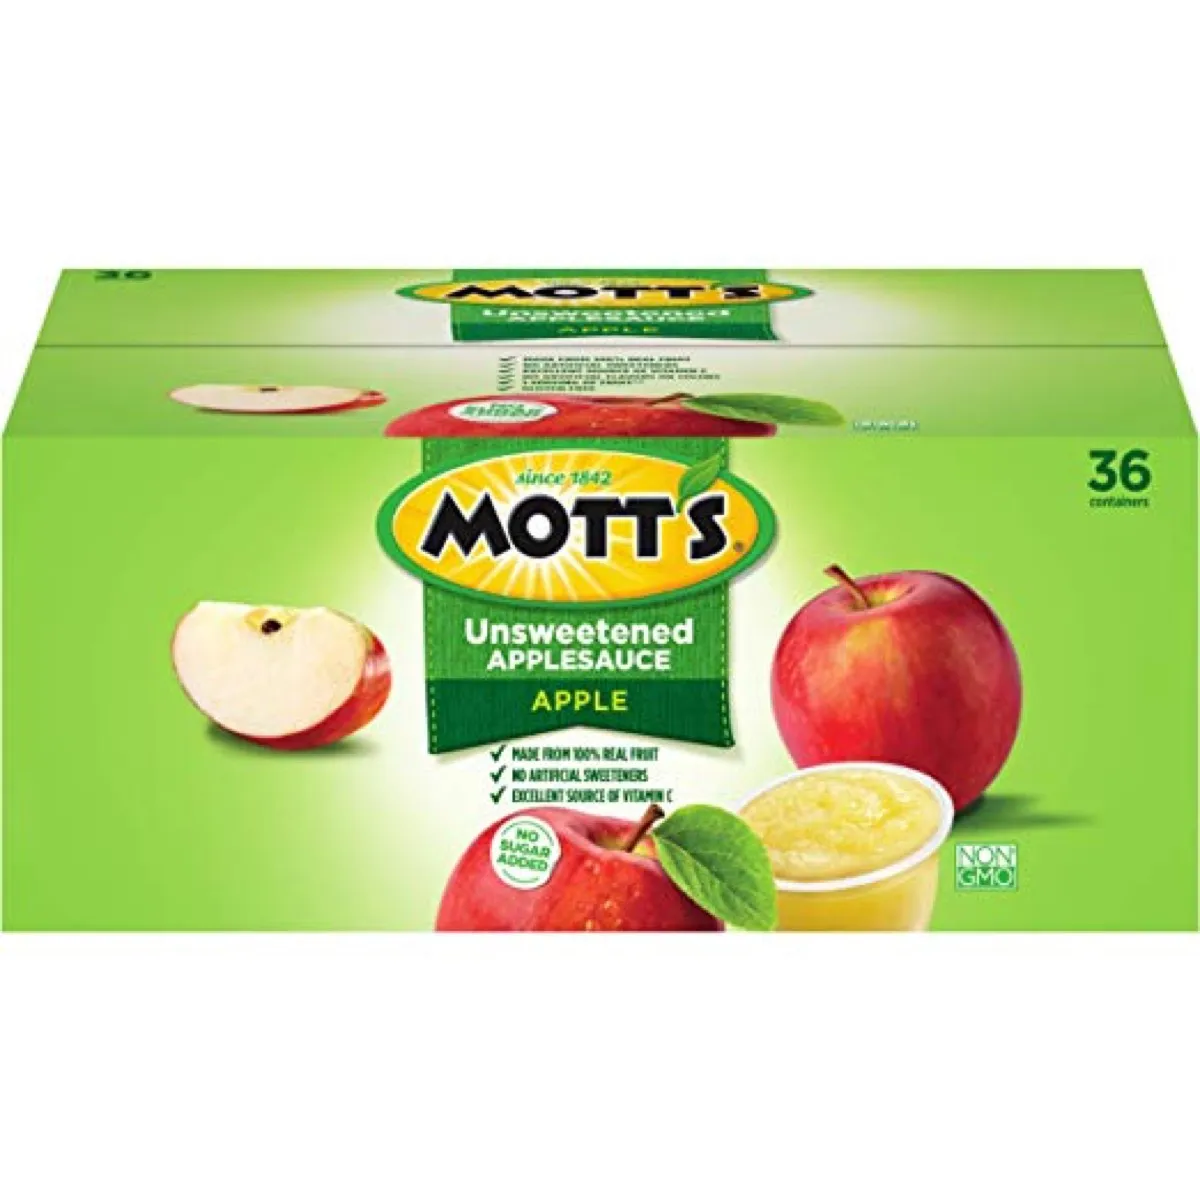 mott's unsweetened applesauce, peanut free preschool snacks